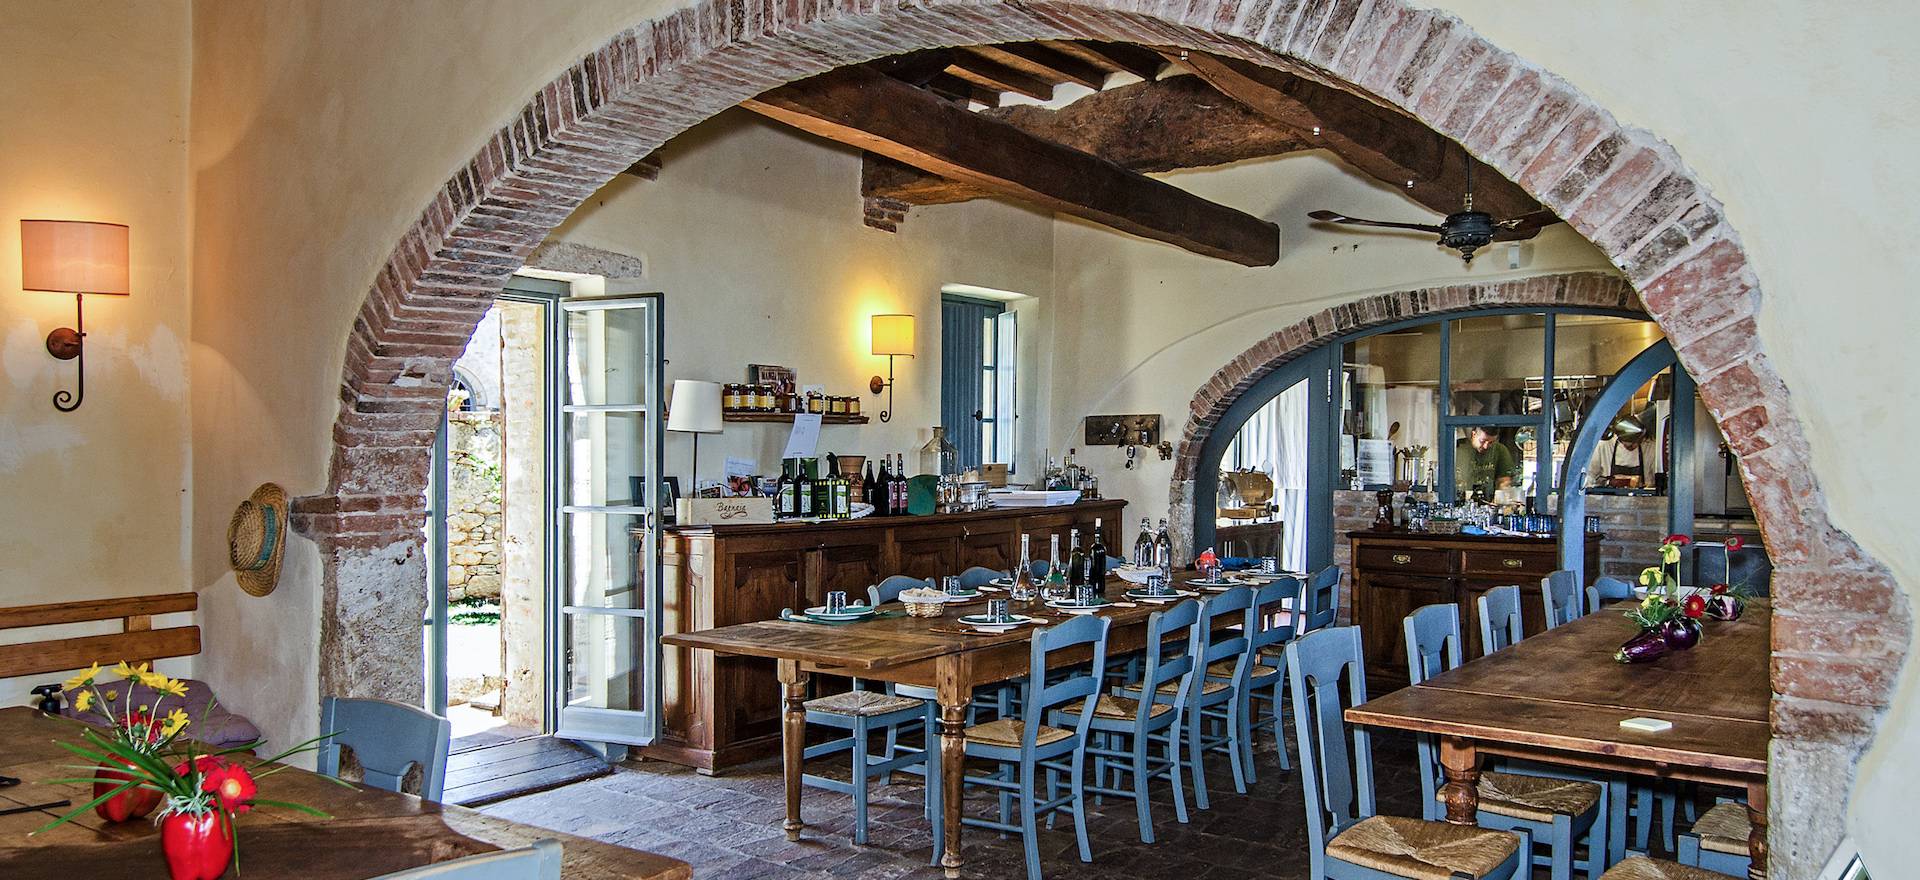 Agriturismo Toscane Agriturismo met restaurant in de buurt van Pienza